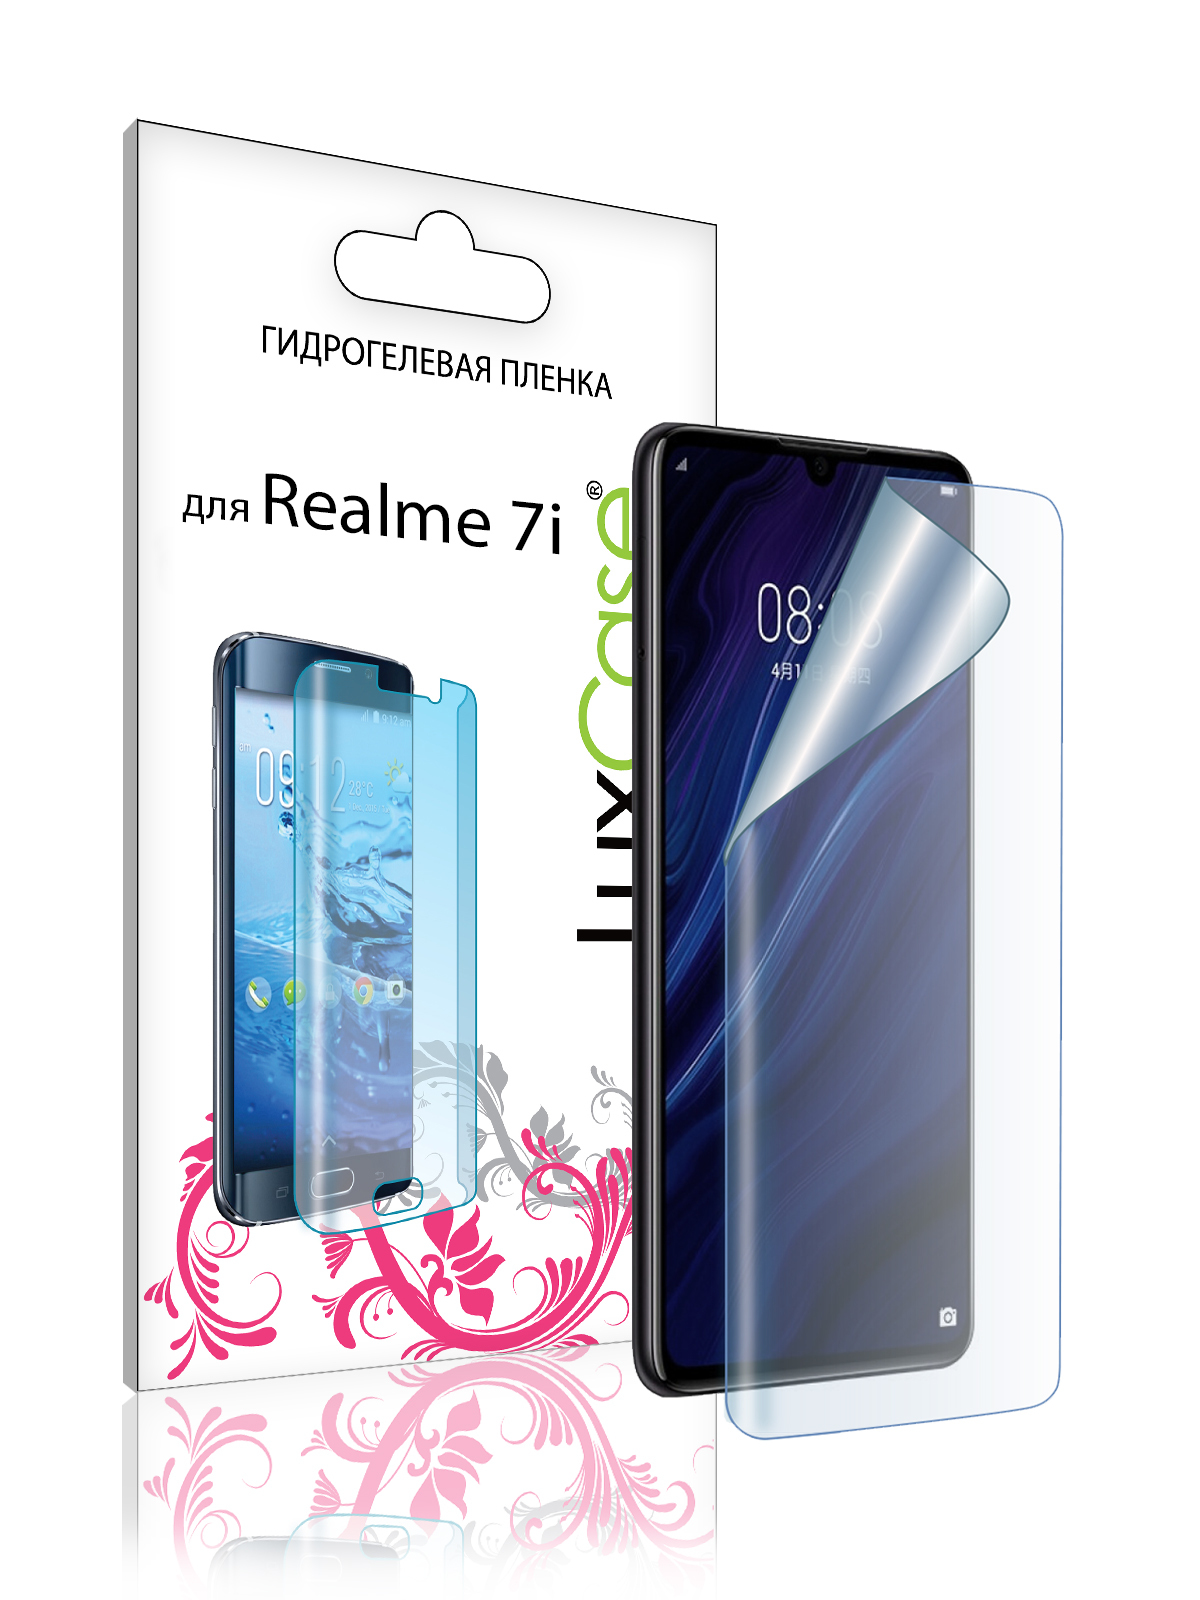 Пленка гидрогелевая LuxCase для Realme 7i 0.14mm Front Transparent 86591 гидрогелевая пленка luxcase для realme 7i 0 14mm back transparent 86592